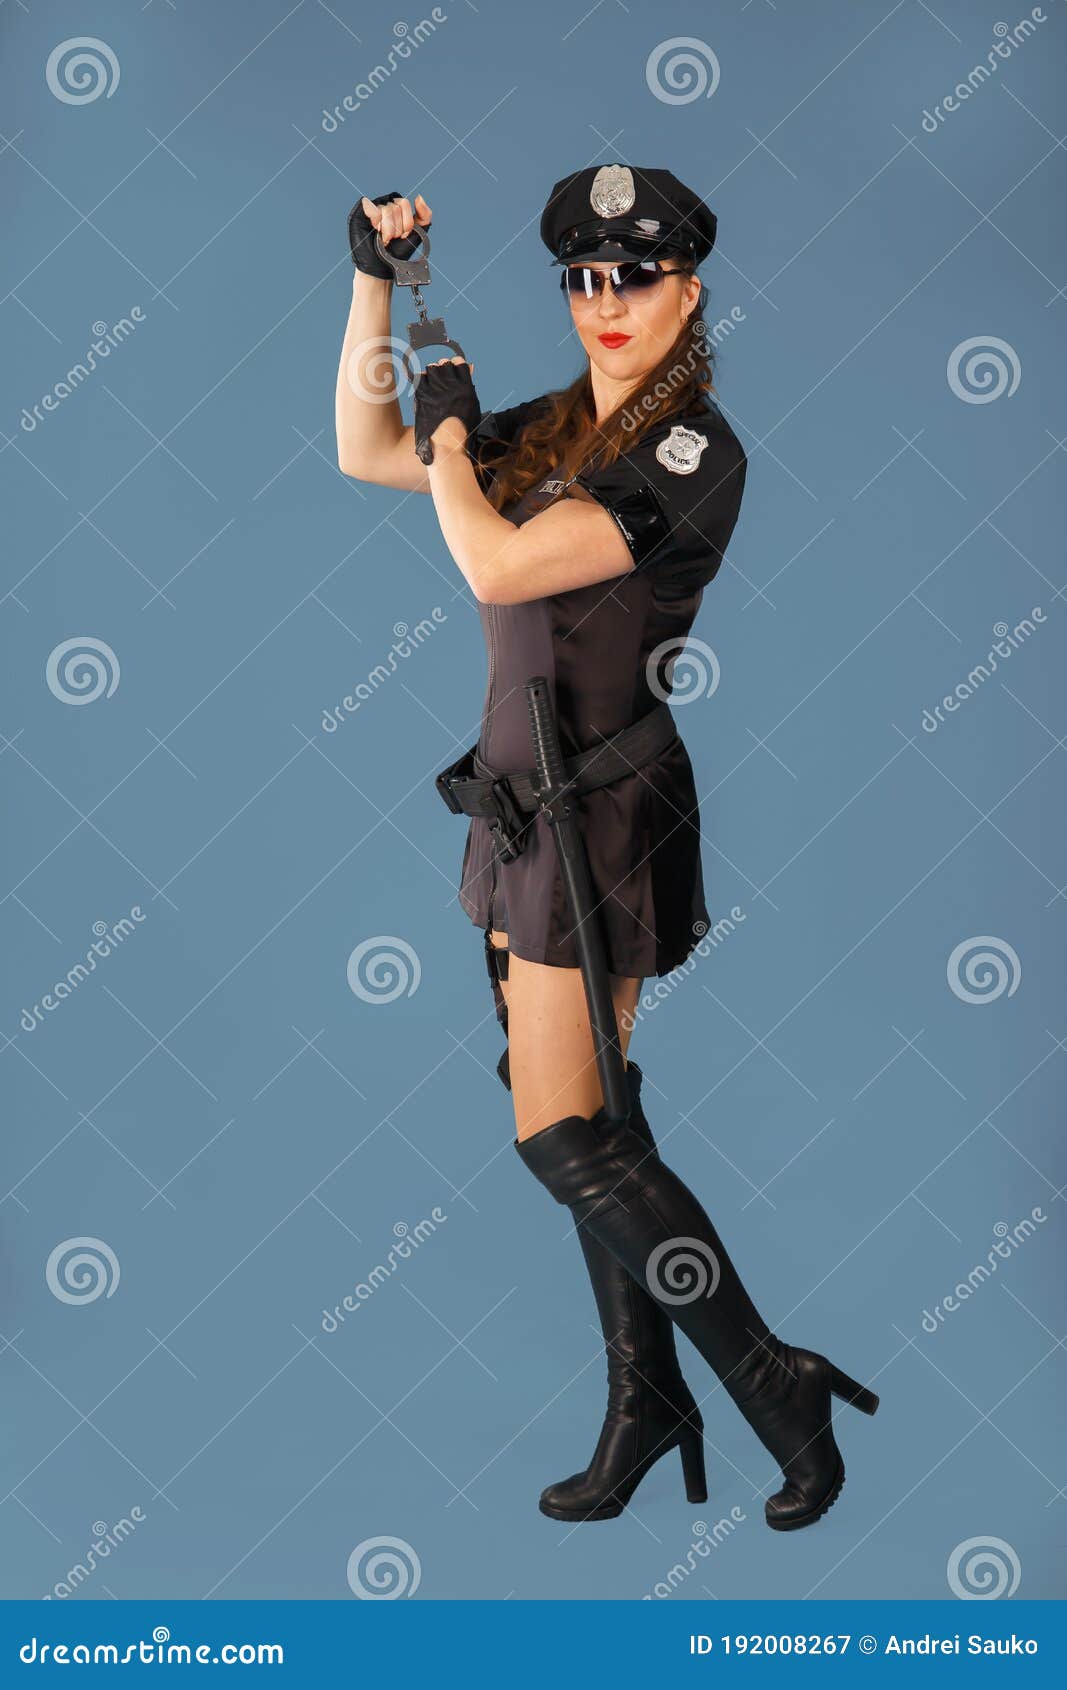 disfraz mujer policia